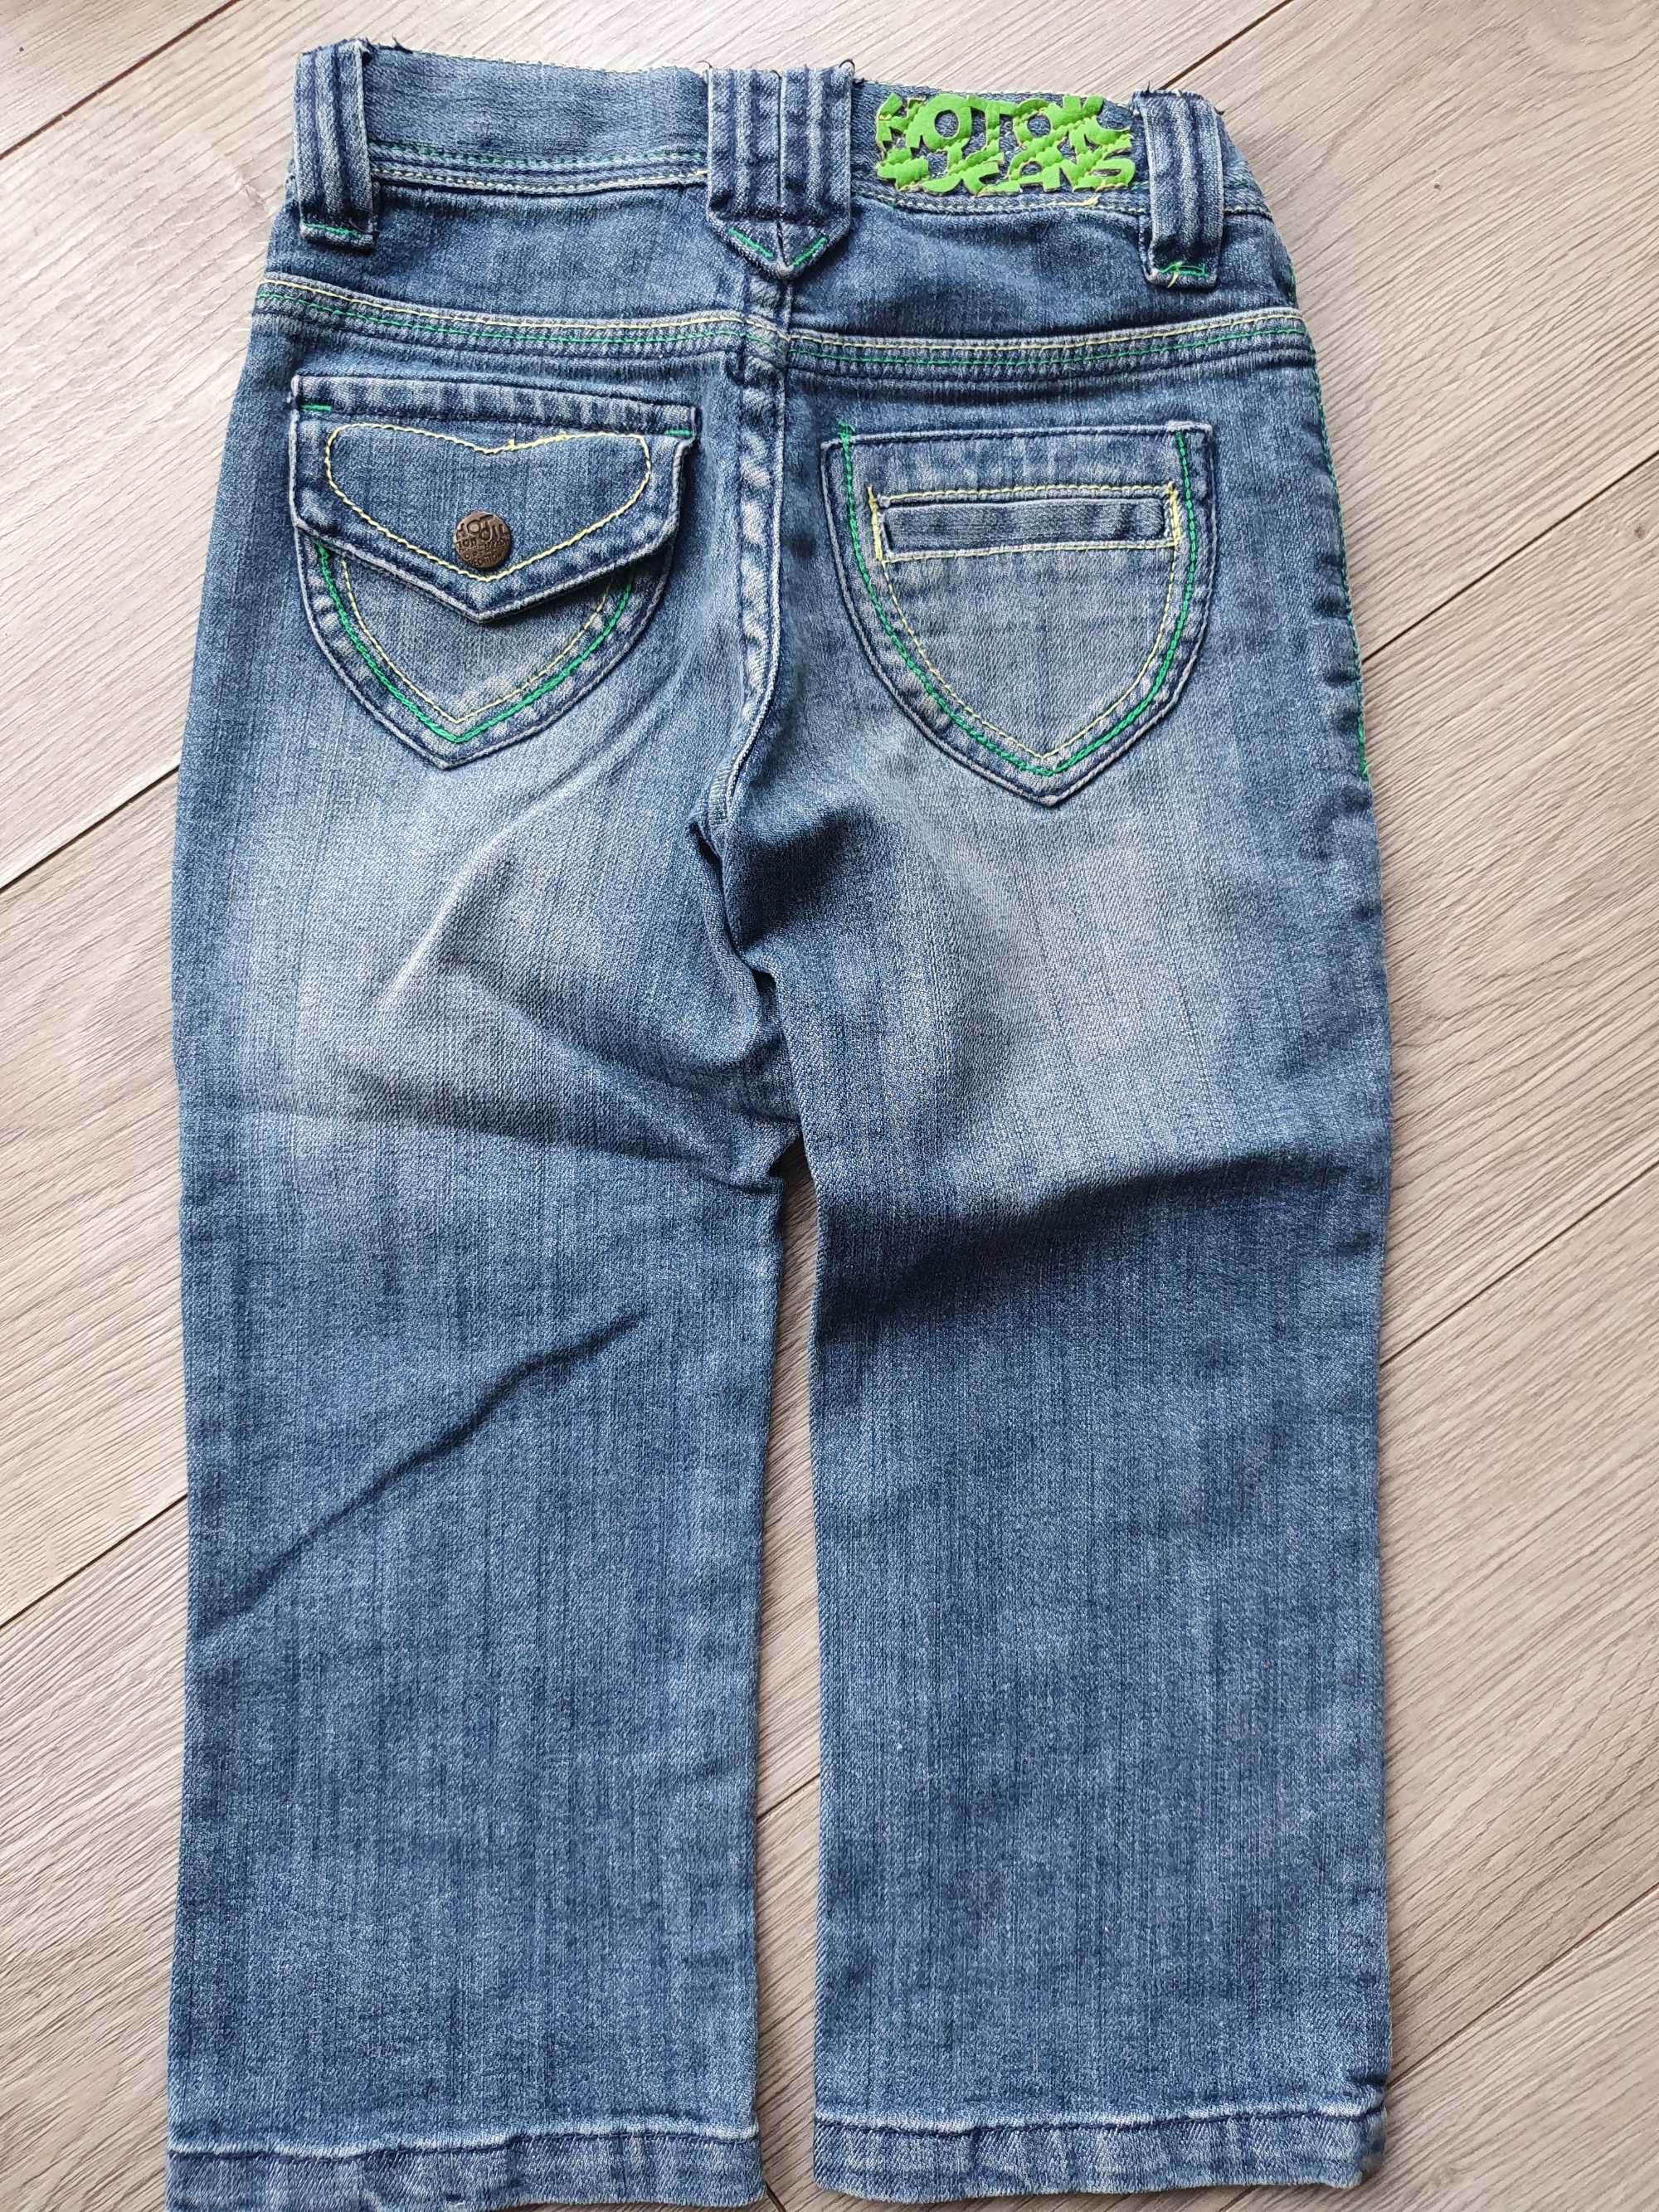 Spodnie spodenki jeans  rozm 98